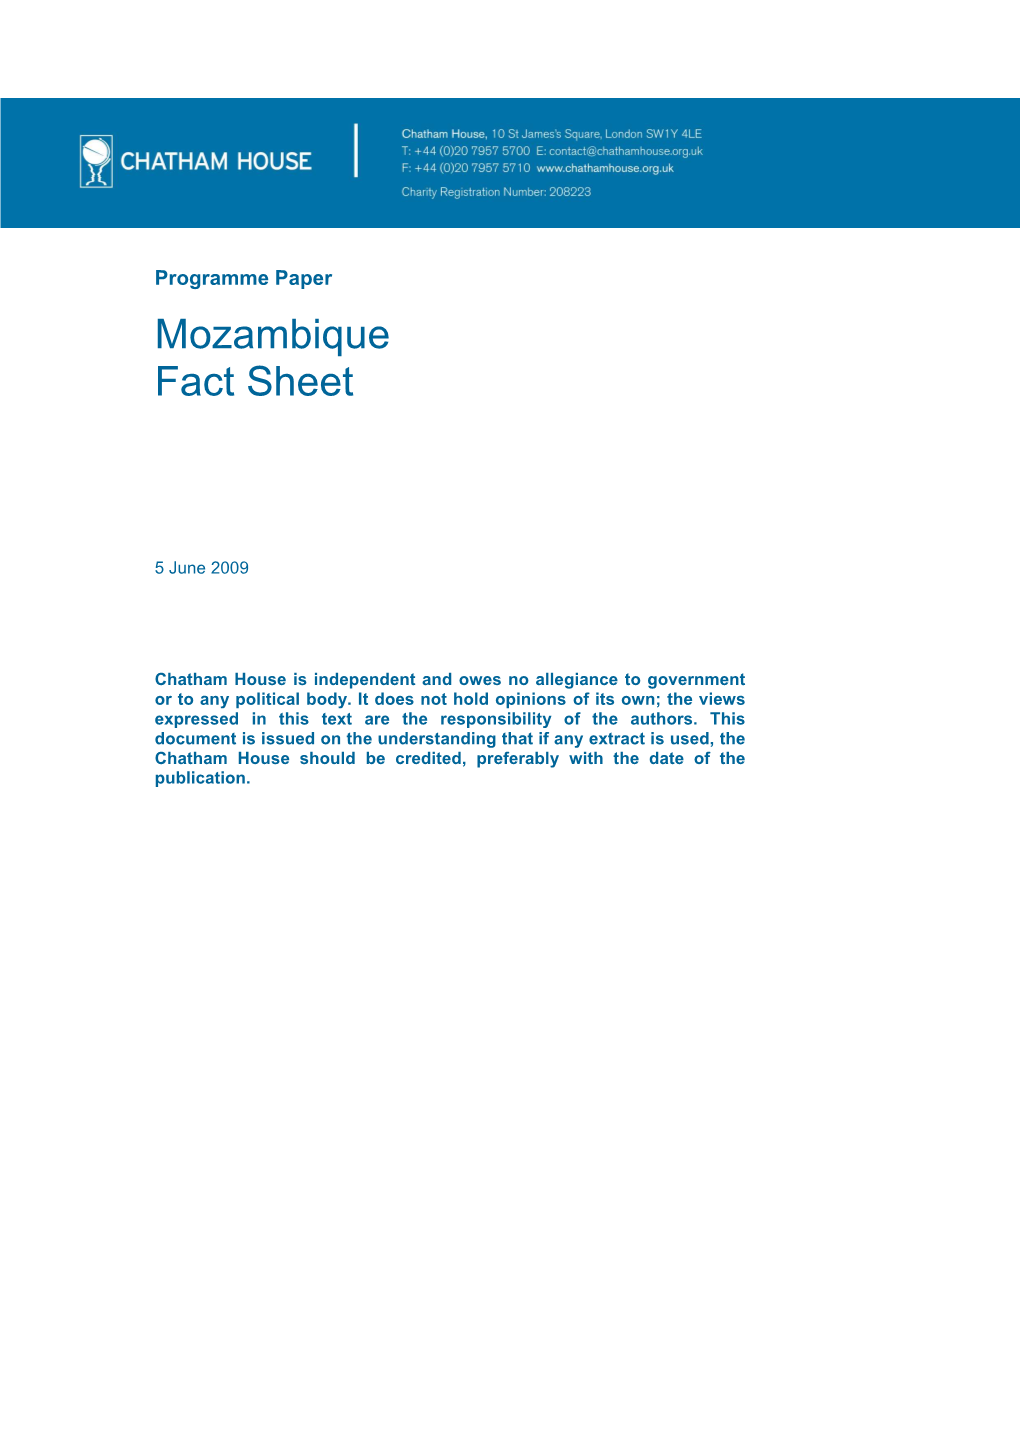 Mozambique Fact Sheet